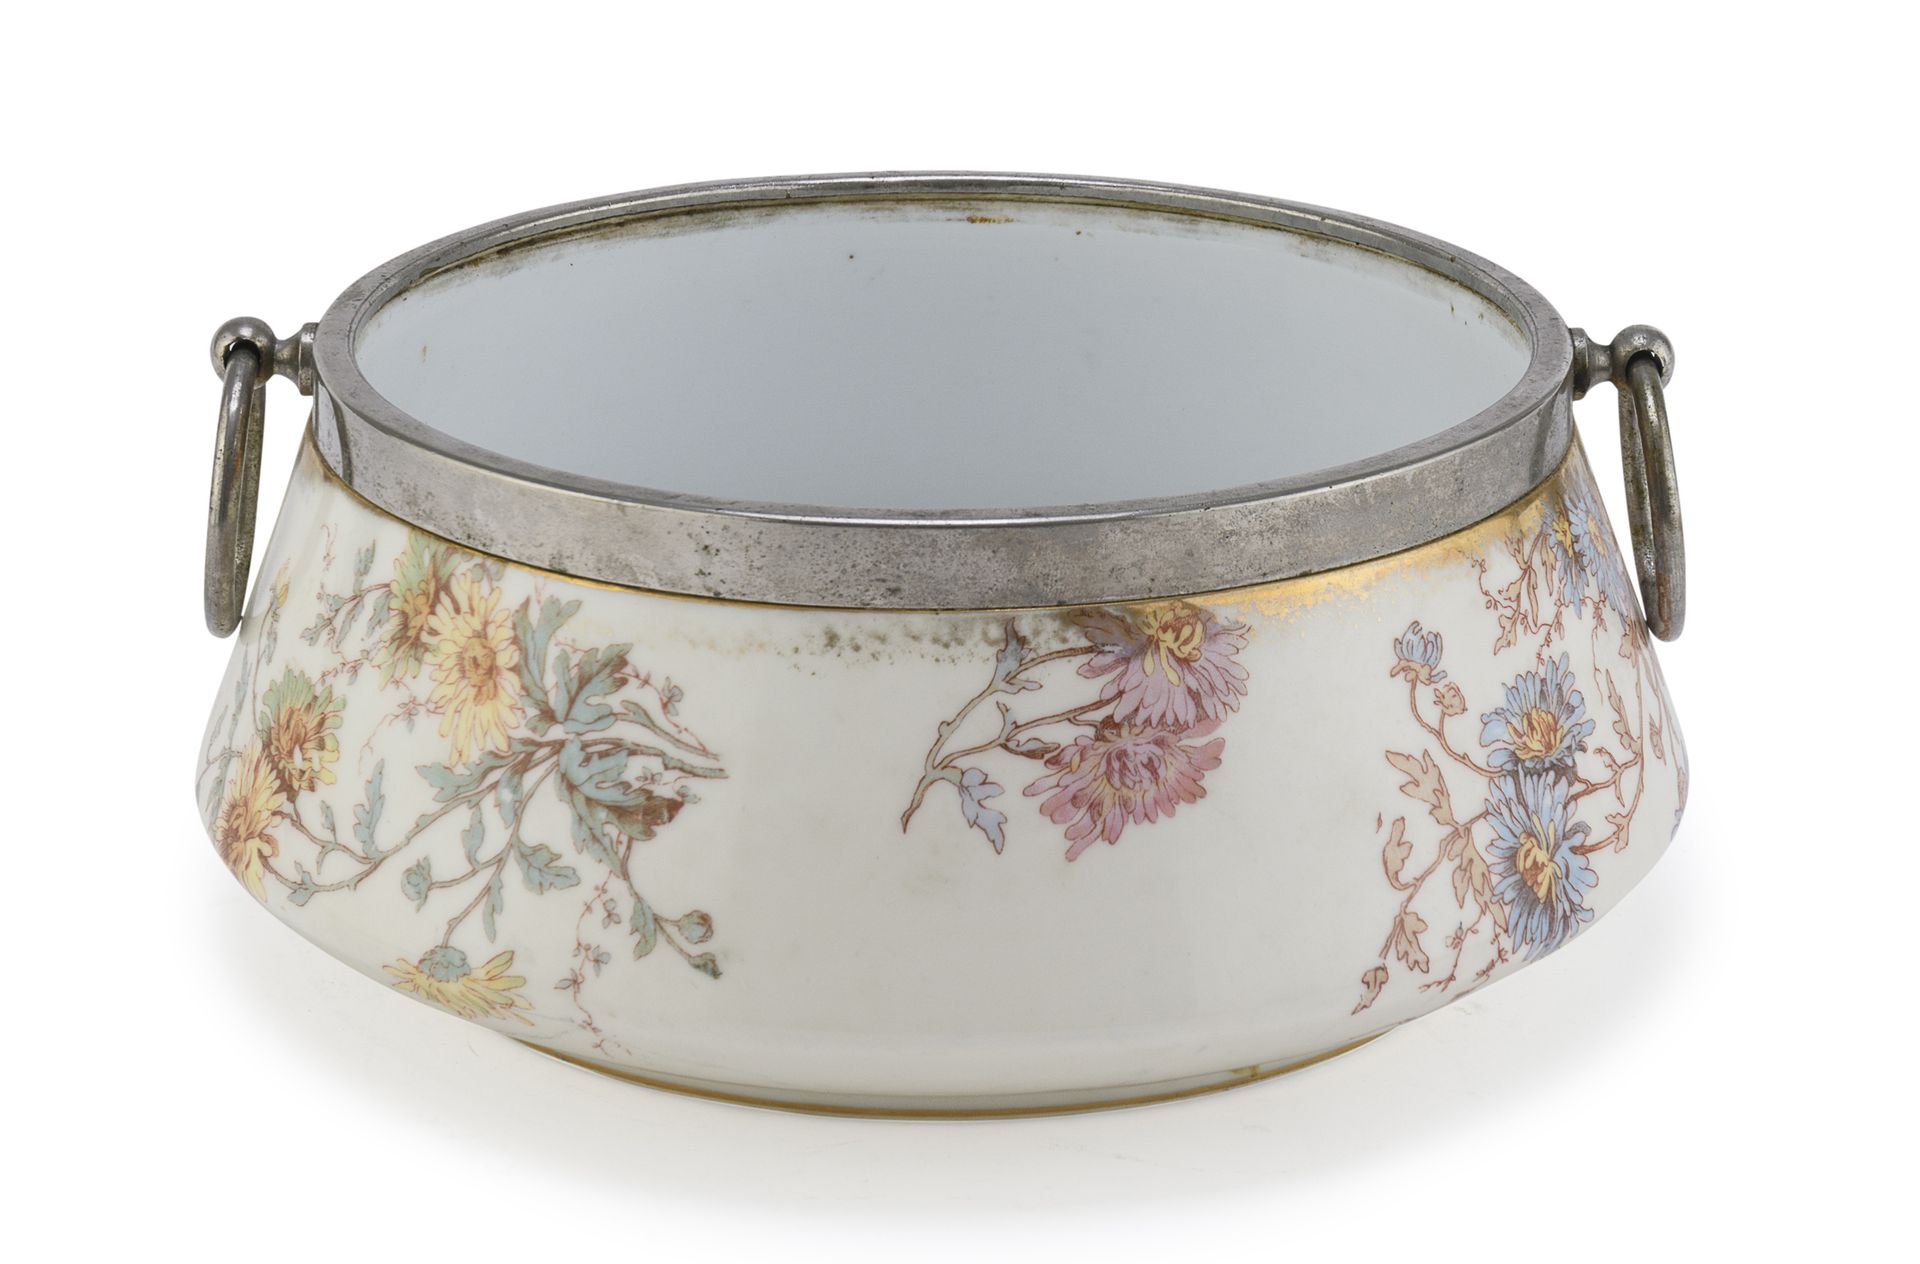 Null 陶瓷水果碗，20世纪


多色的花纹装饰。银色金属边框和手柄。


尺寸 cm. 11 x 24.